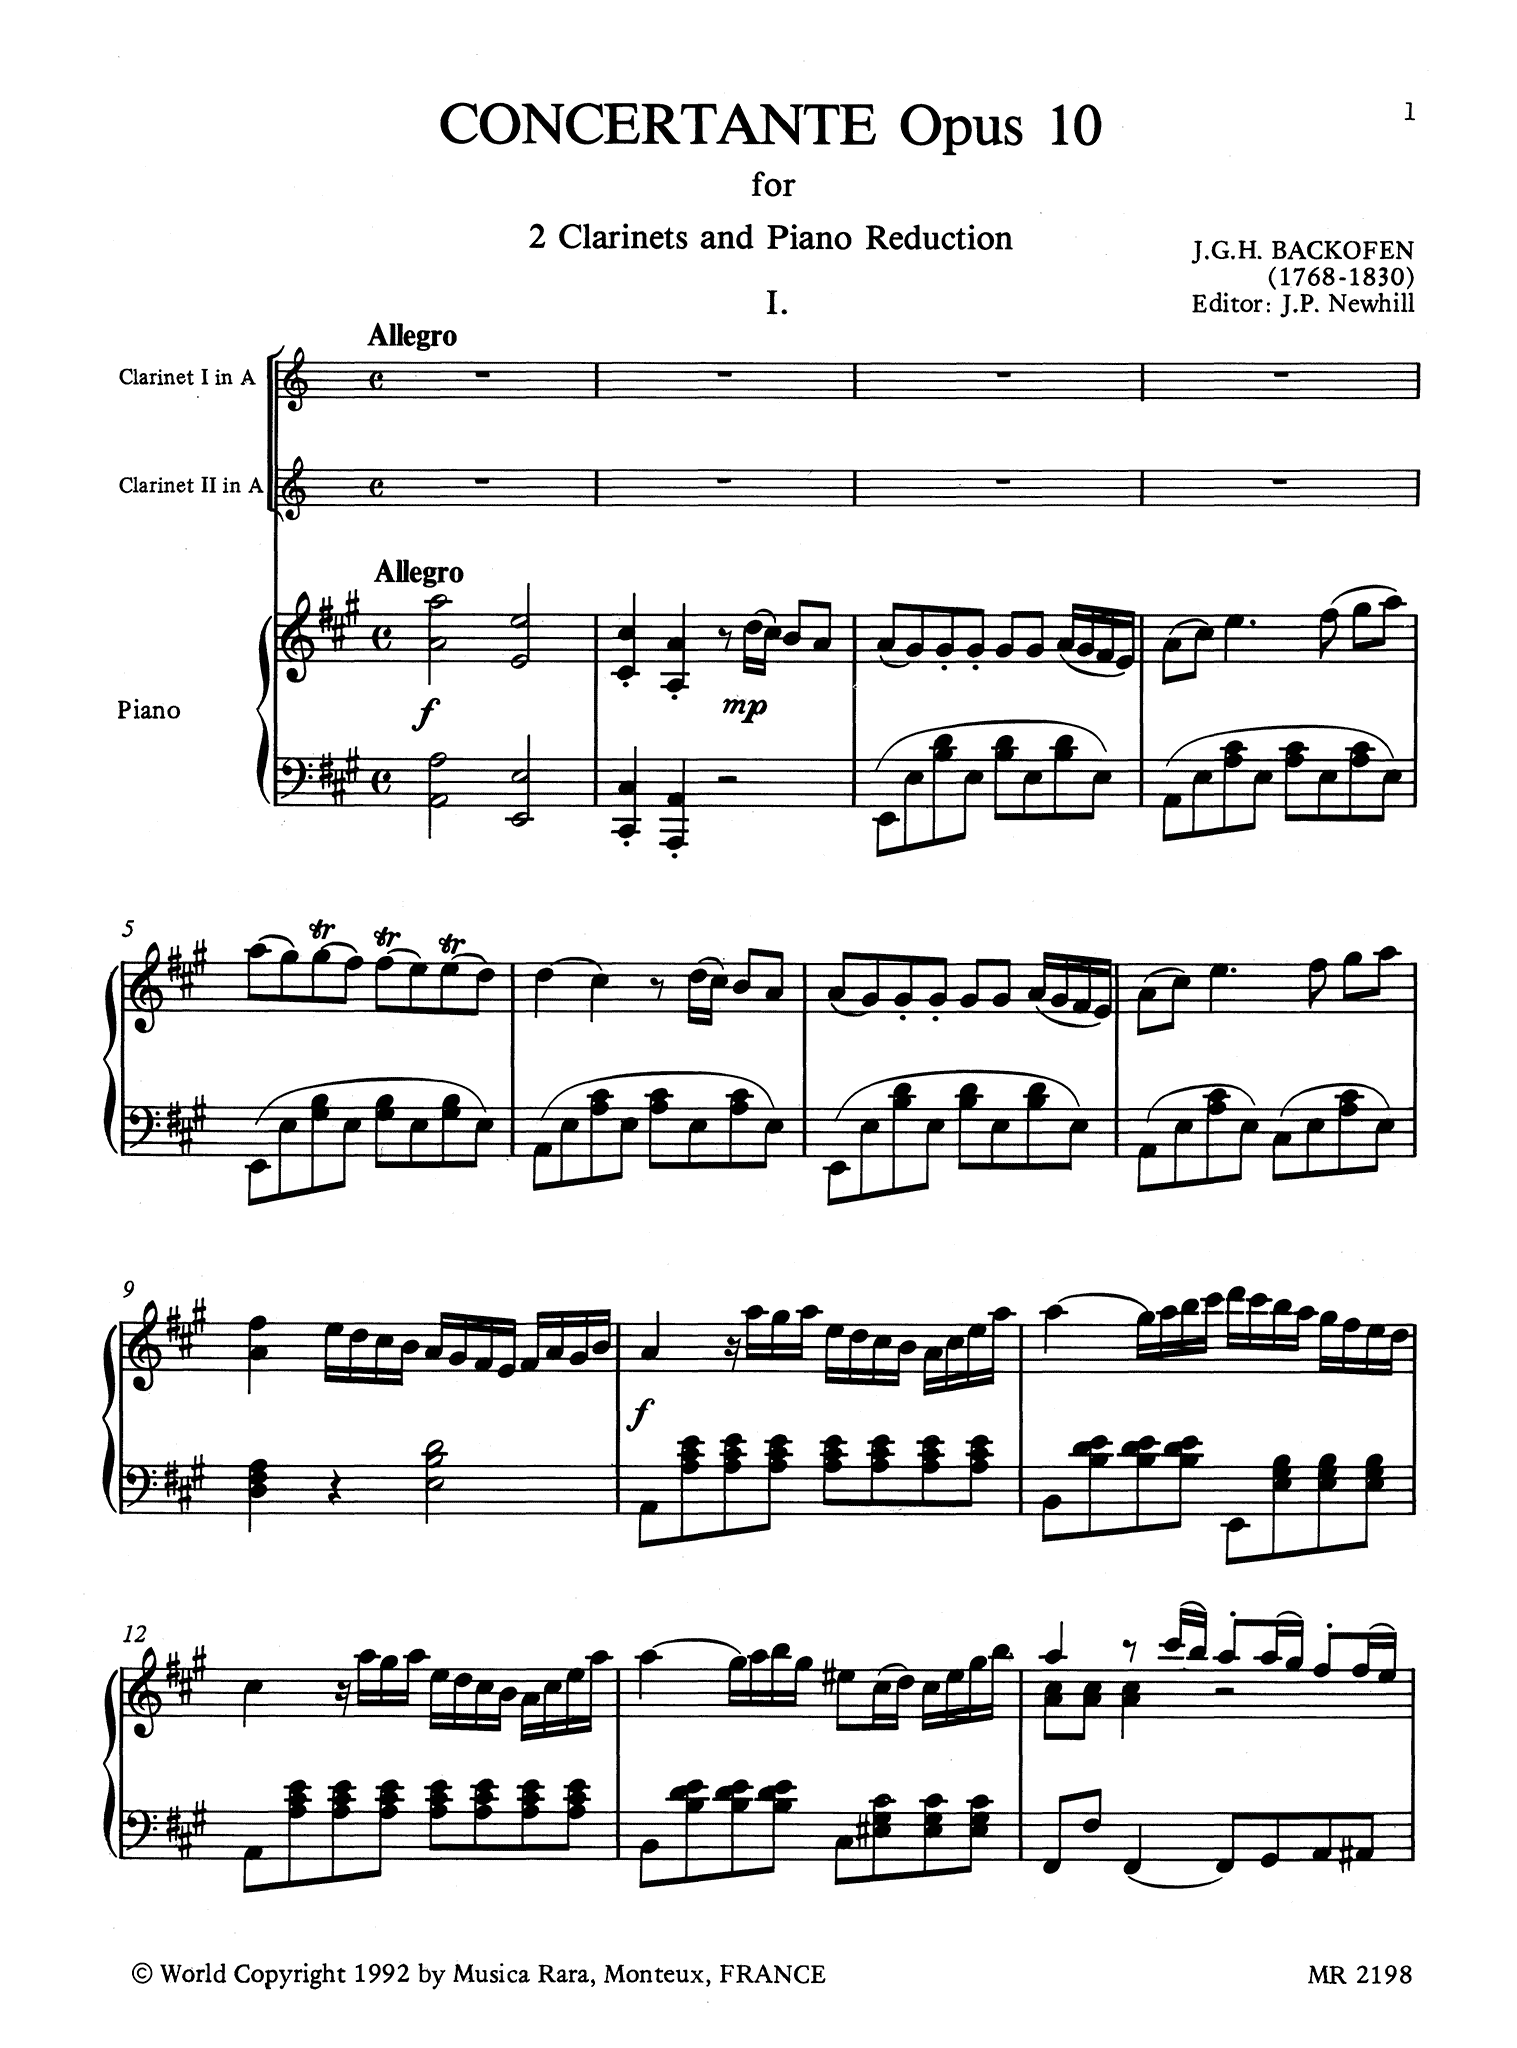 Backofen Sinfonia Concertante, Op. 10 - Movement 1